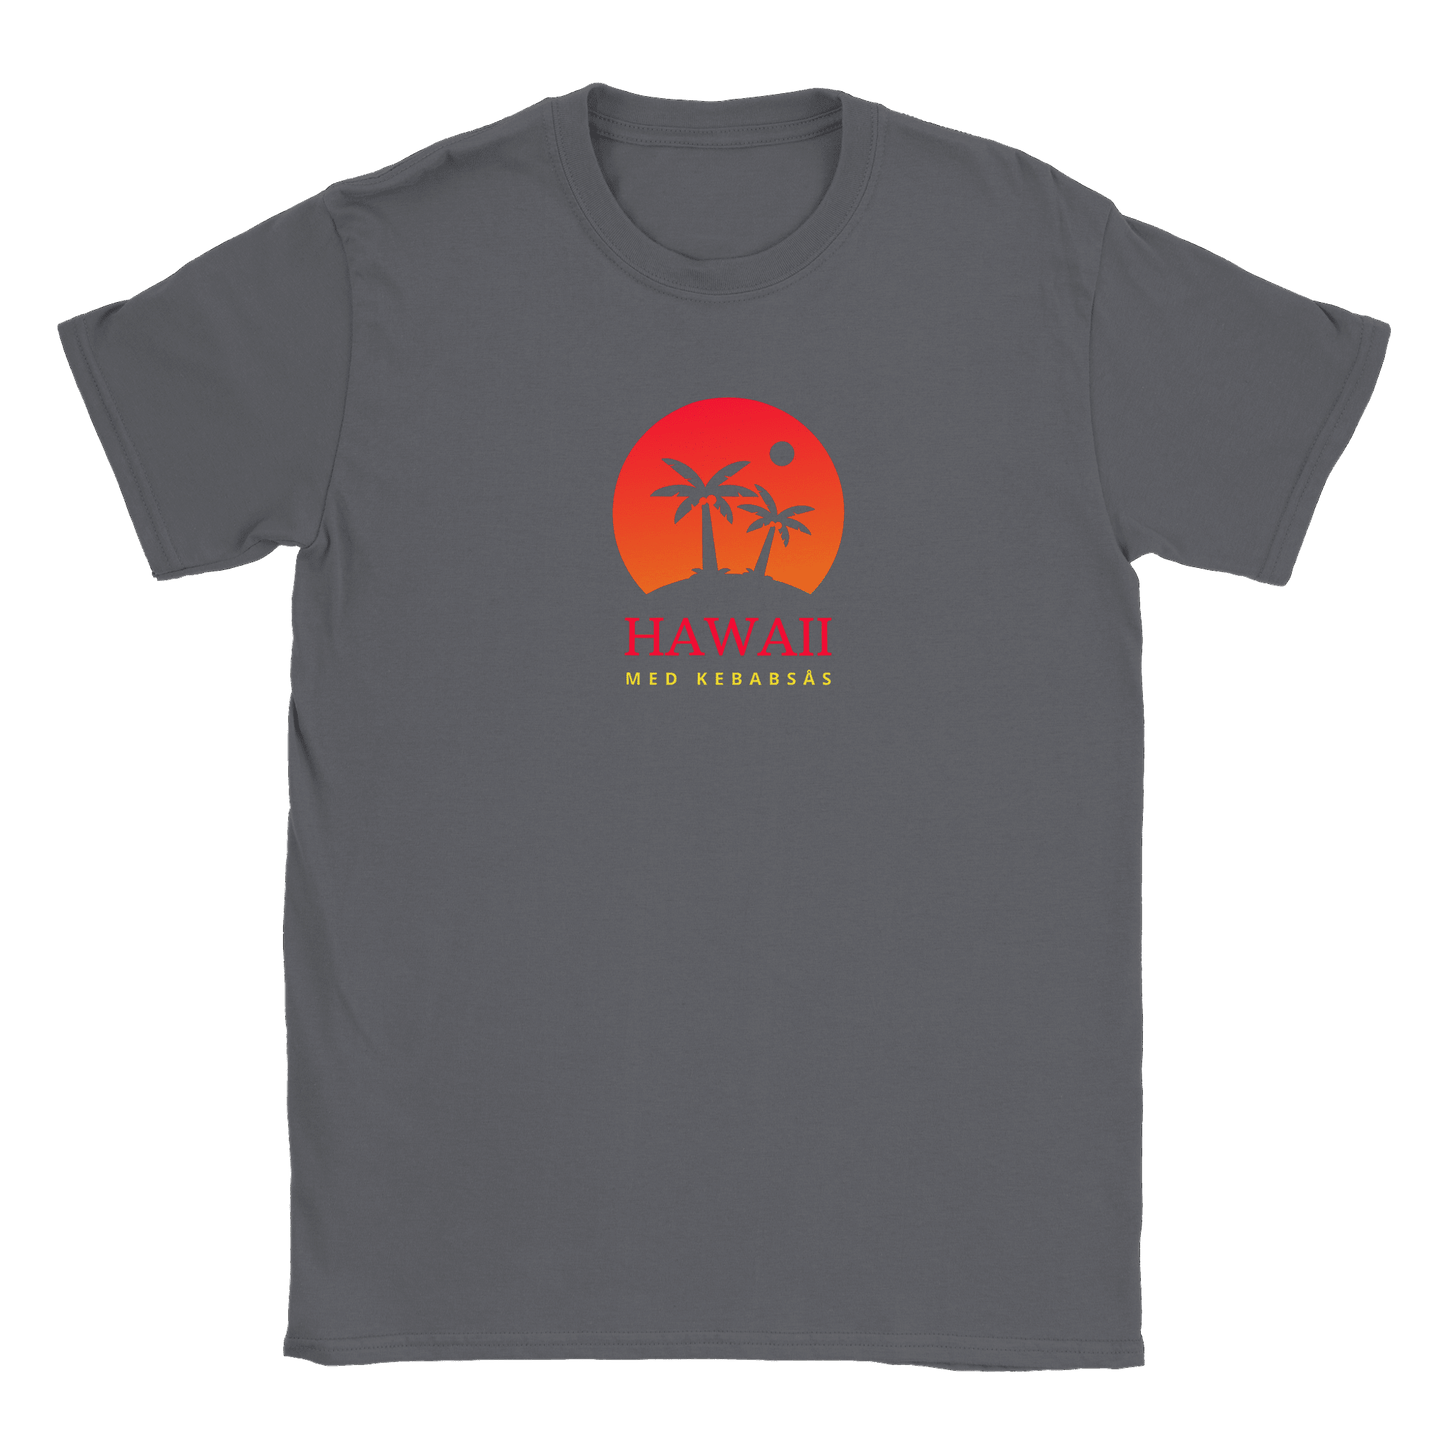 Hawaii med kebabsås - T-shirt Charcoal